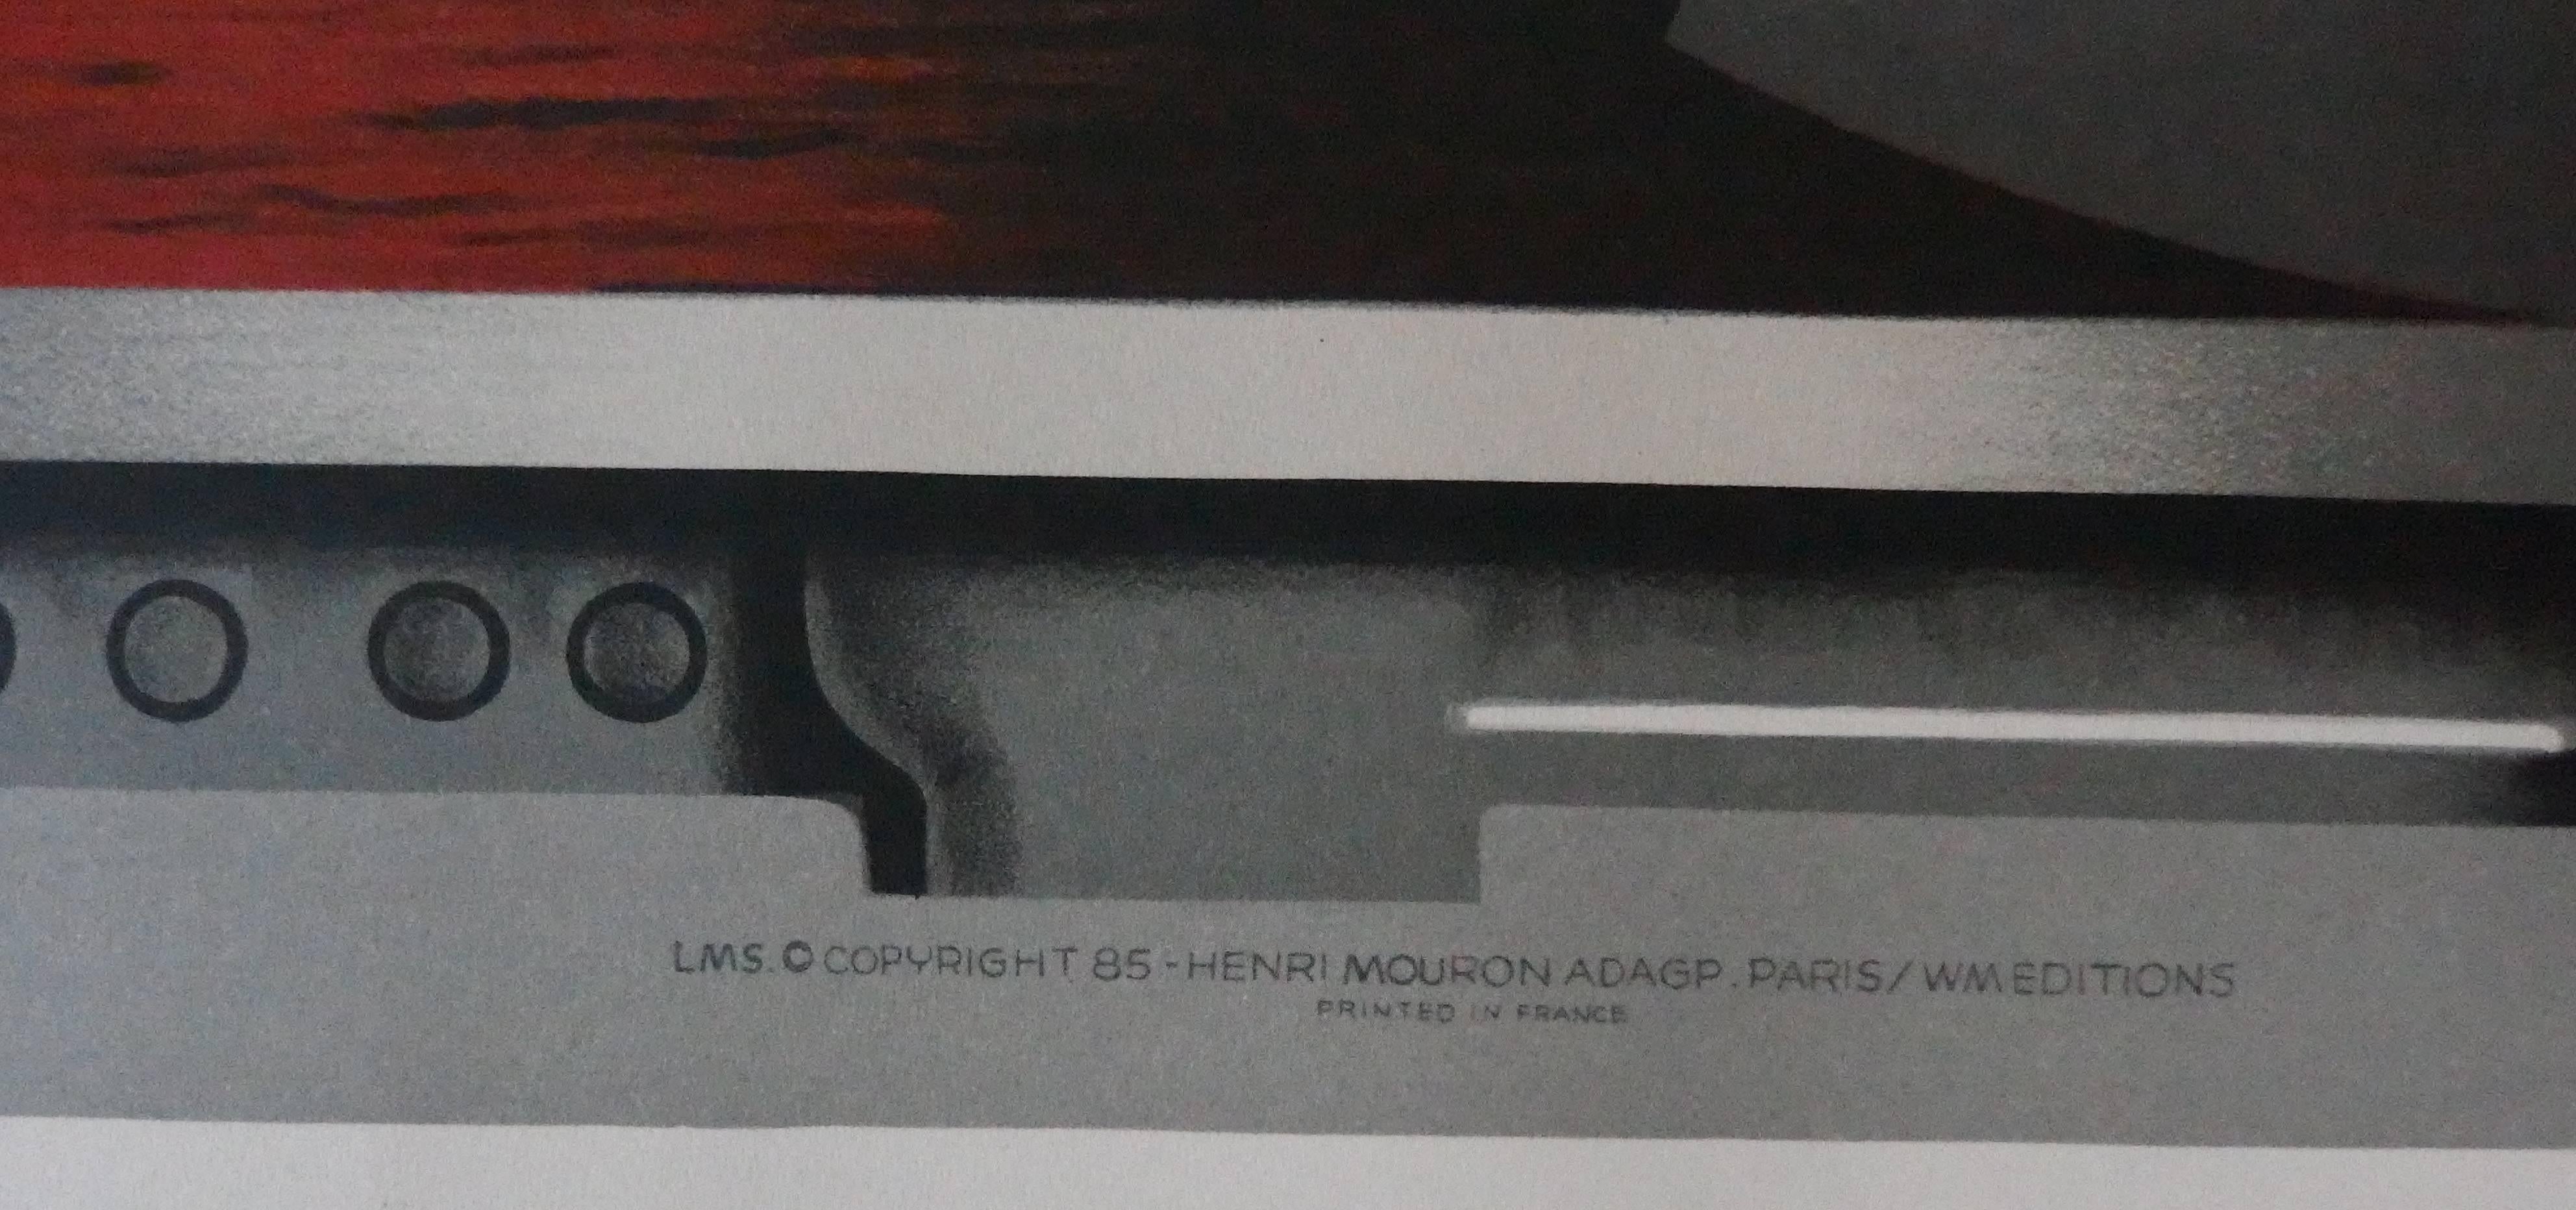 Adolfe MOURON CASSANDRE (after)
Railways : LMS Best Way

Stone lithograph
Plate signed
On light vellum 92 x 115 cm (c.37 x 46